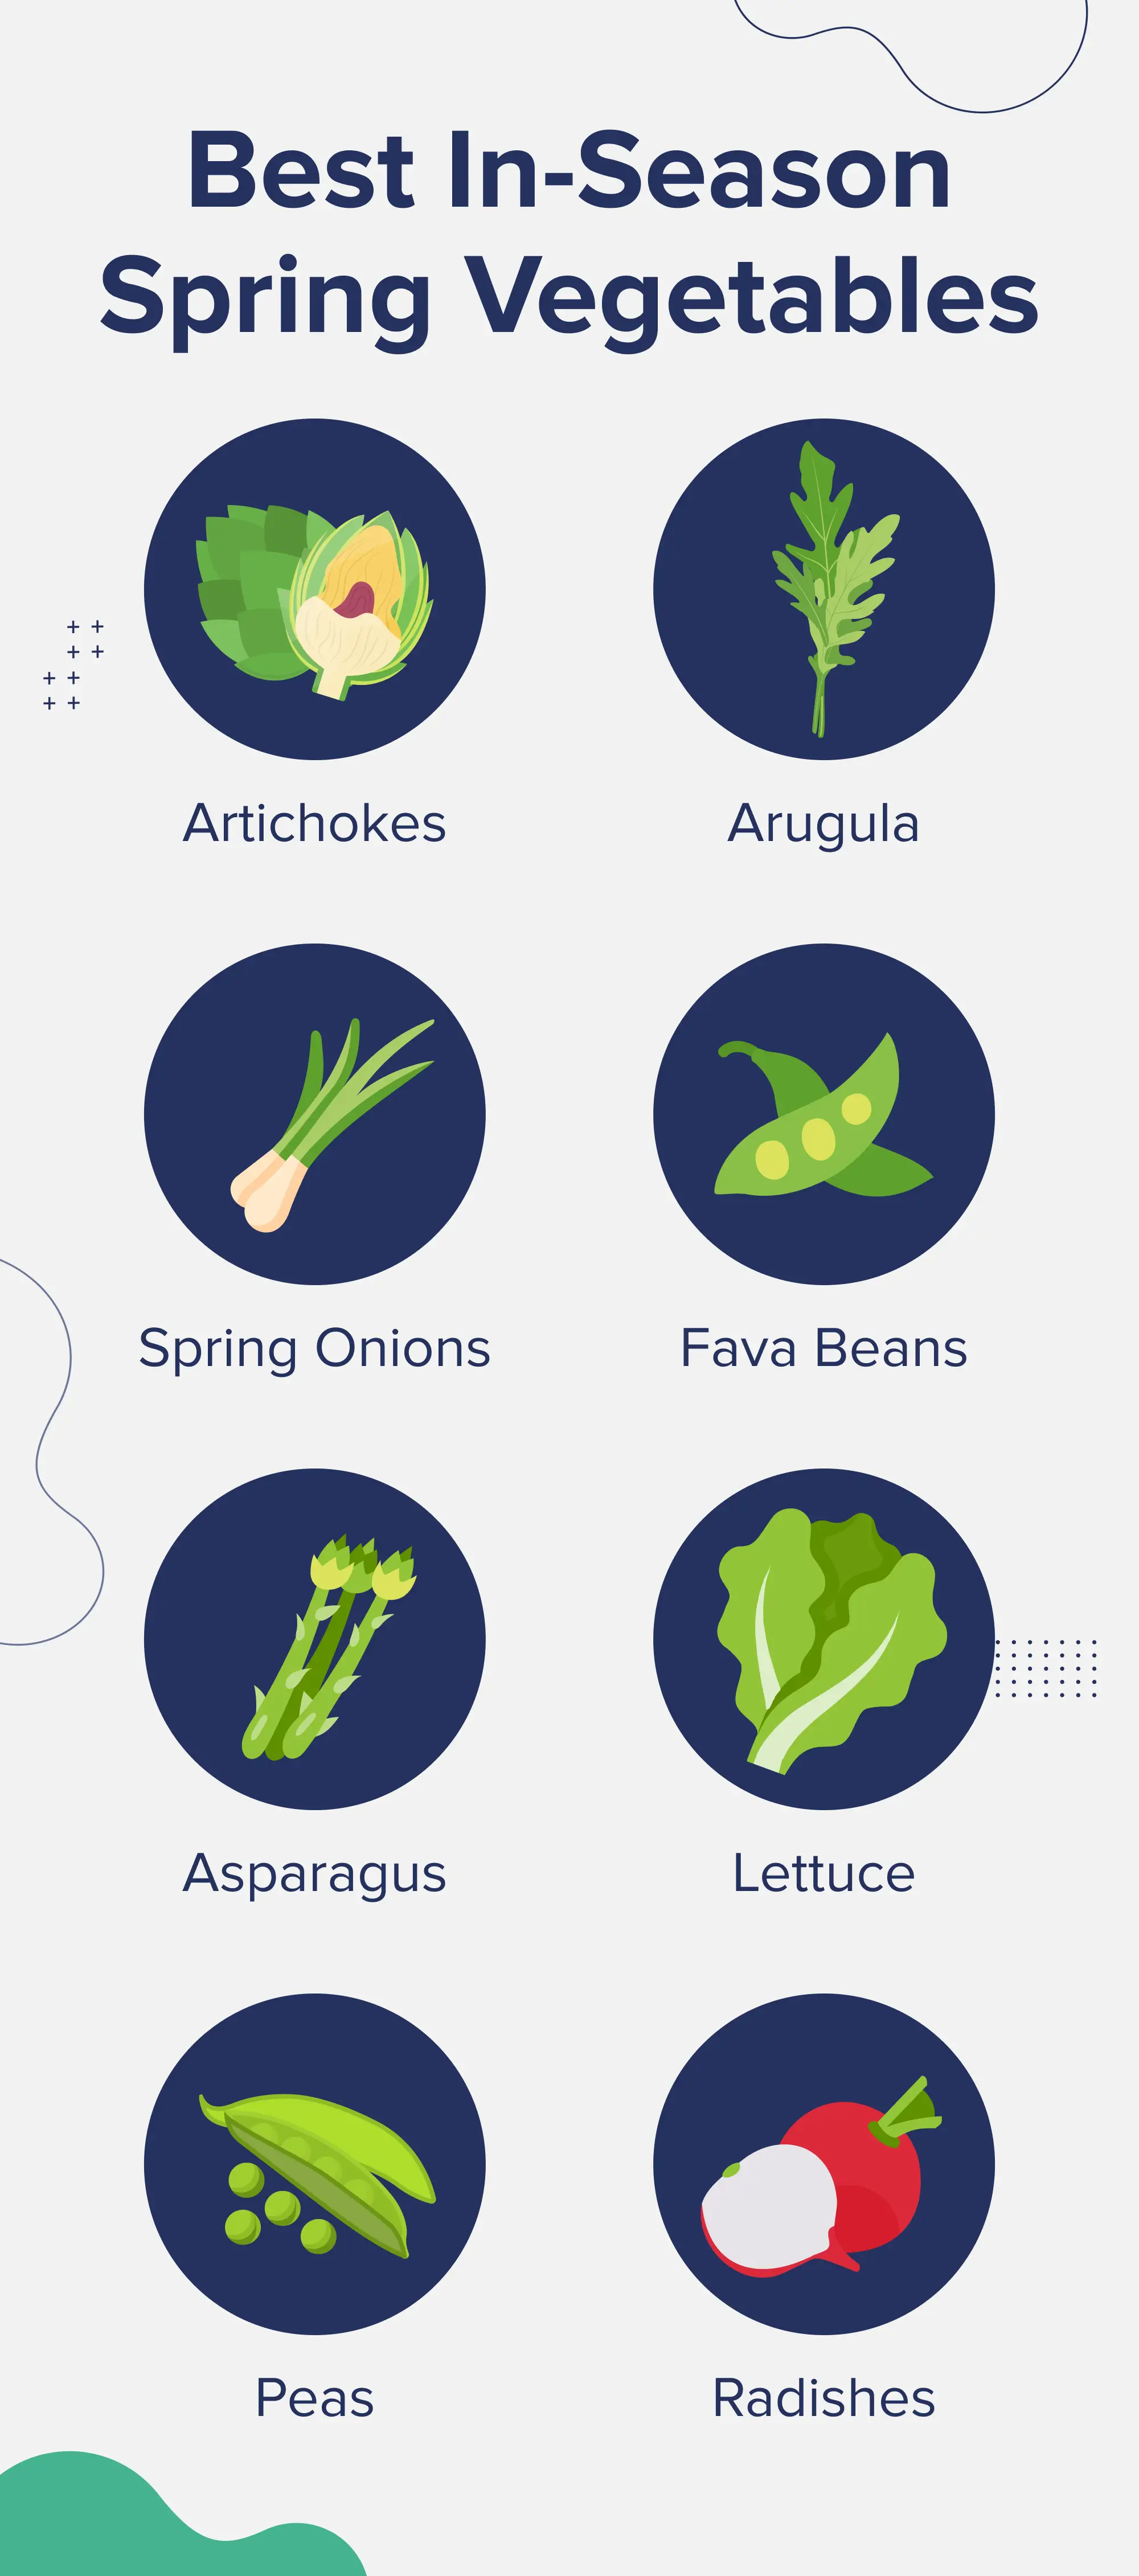 Best In-Season Spring Vegetables- Artichokes- Arugula- Spring Onions- Fava Beans- Asparagus- Lettuce- Peas- Radishes